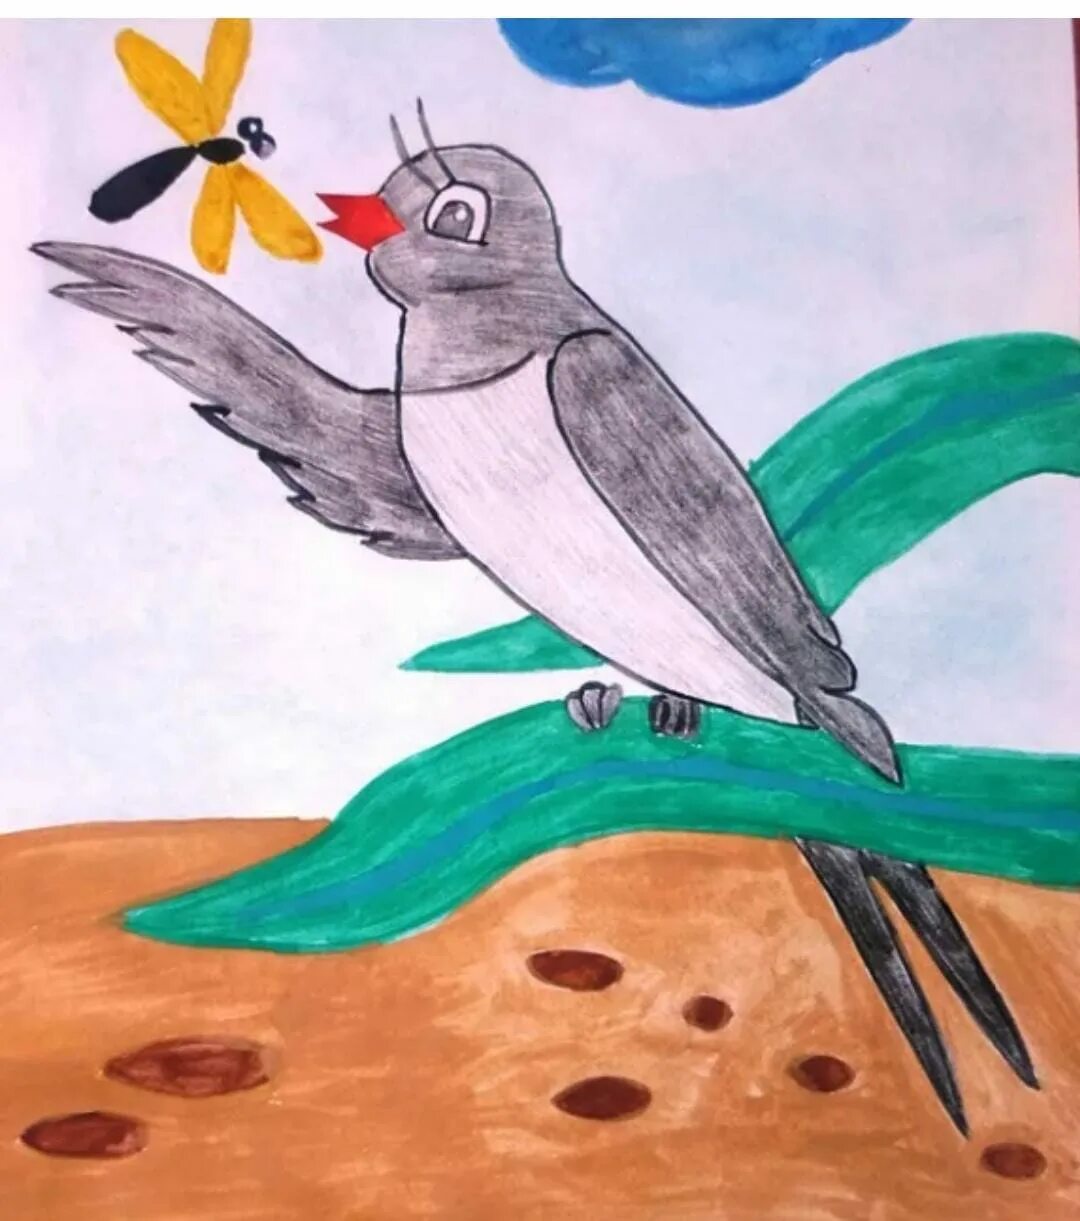 Рисунок к дню птиц. Детские рисунки птиц. Рисунок птицы на конкурс. День рисования птиц. Рисунок ко Дню птиц.